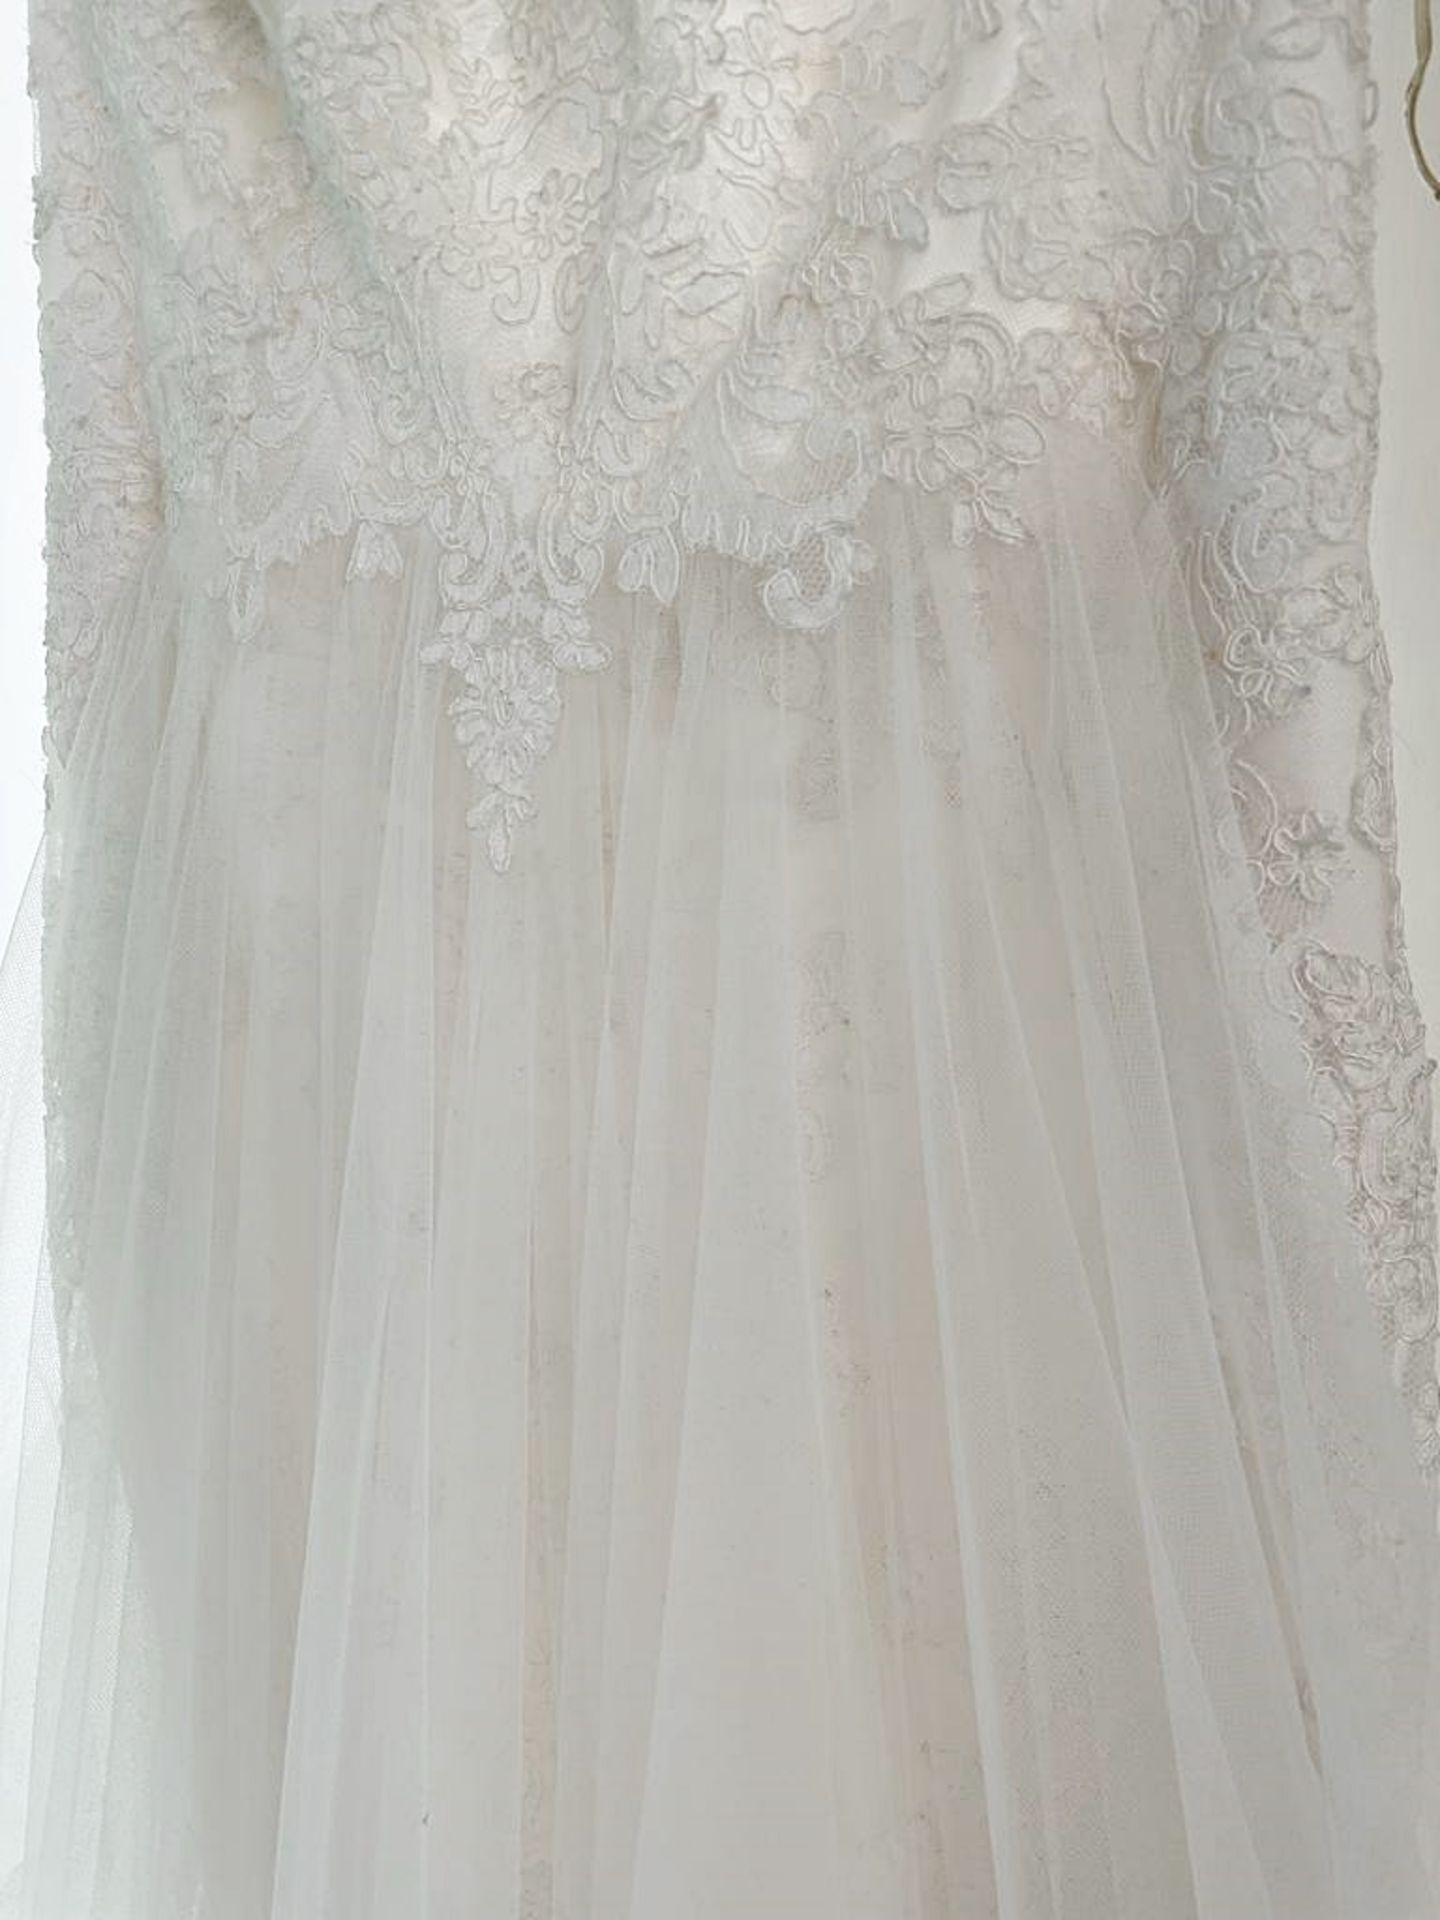 1 x LUSAN MANDONGUS 'Vola' 100% Silk Designer Wedding Dress Bridal Gown - Size: UK 12 - RRP £1,850 - Image 5 of 9